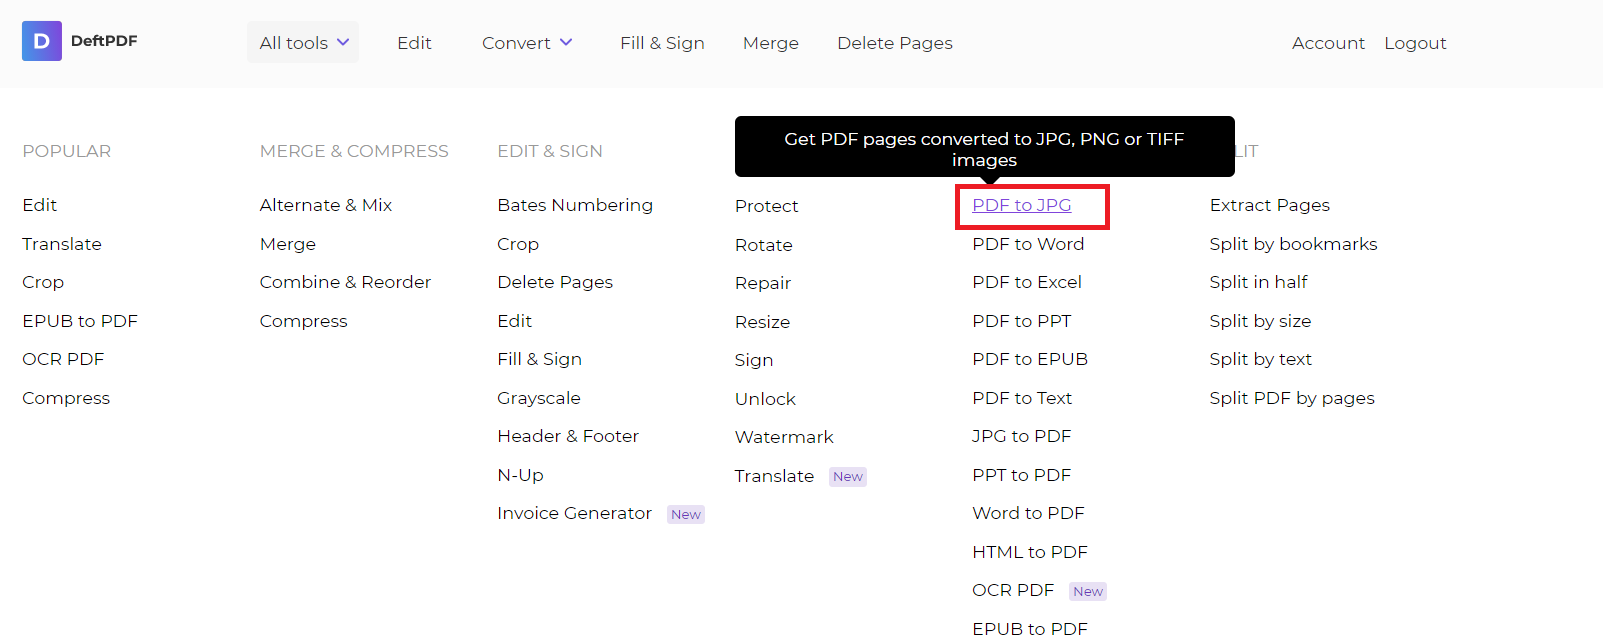 PDF to JPEG tool